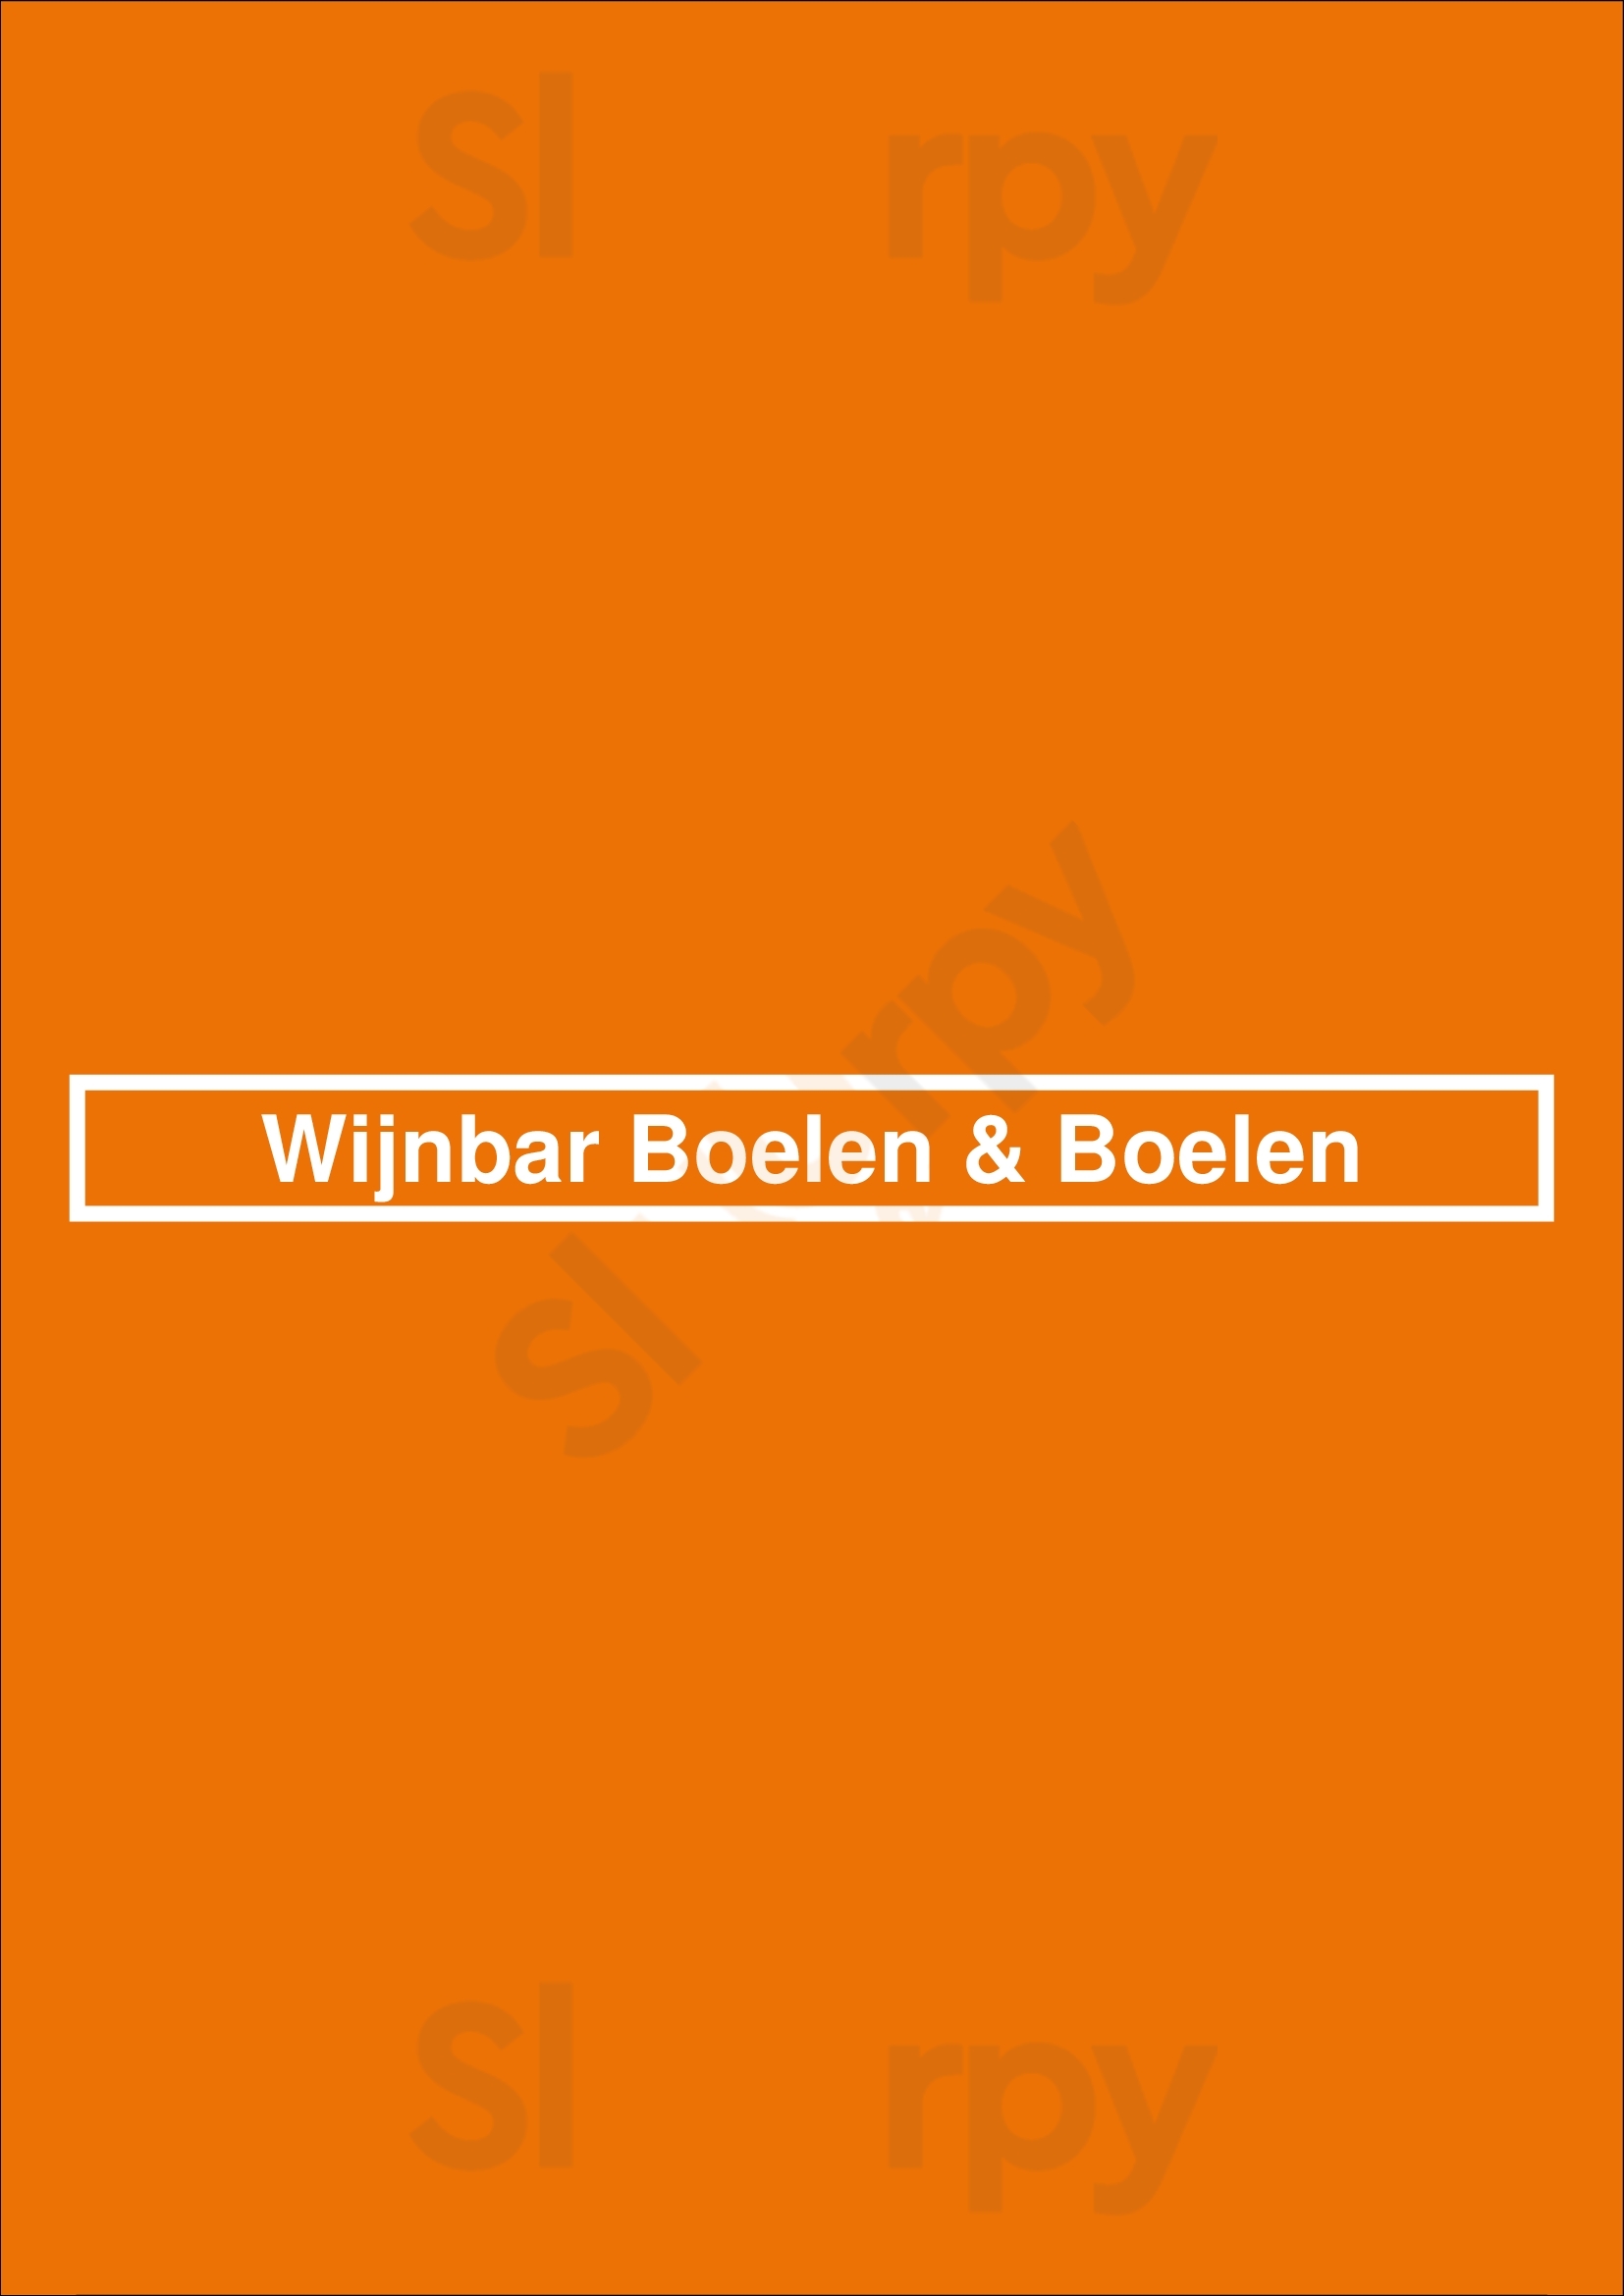 Wijnbar Boelen & Boelen Amsterdam Menu - 1